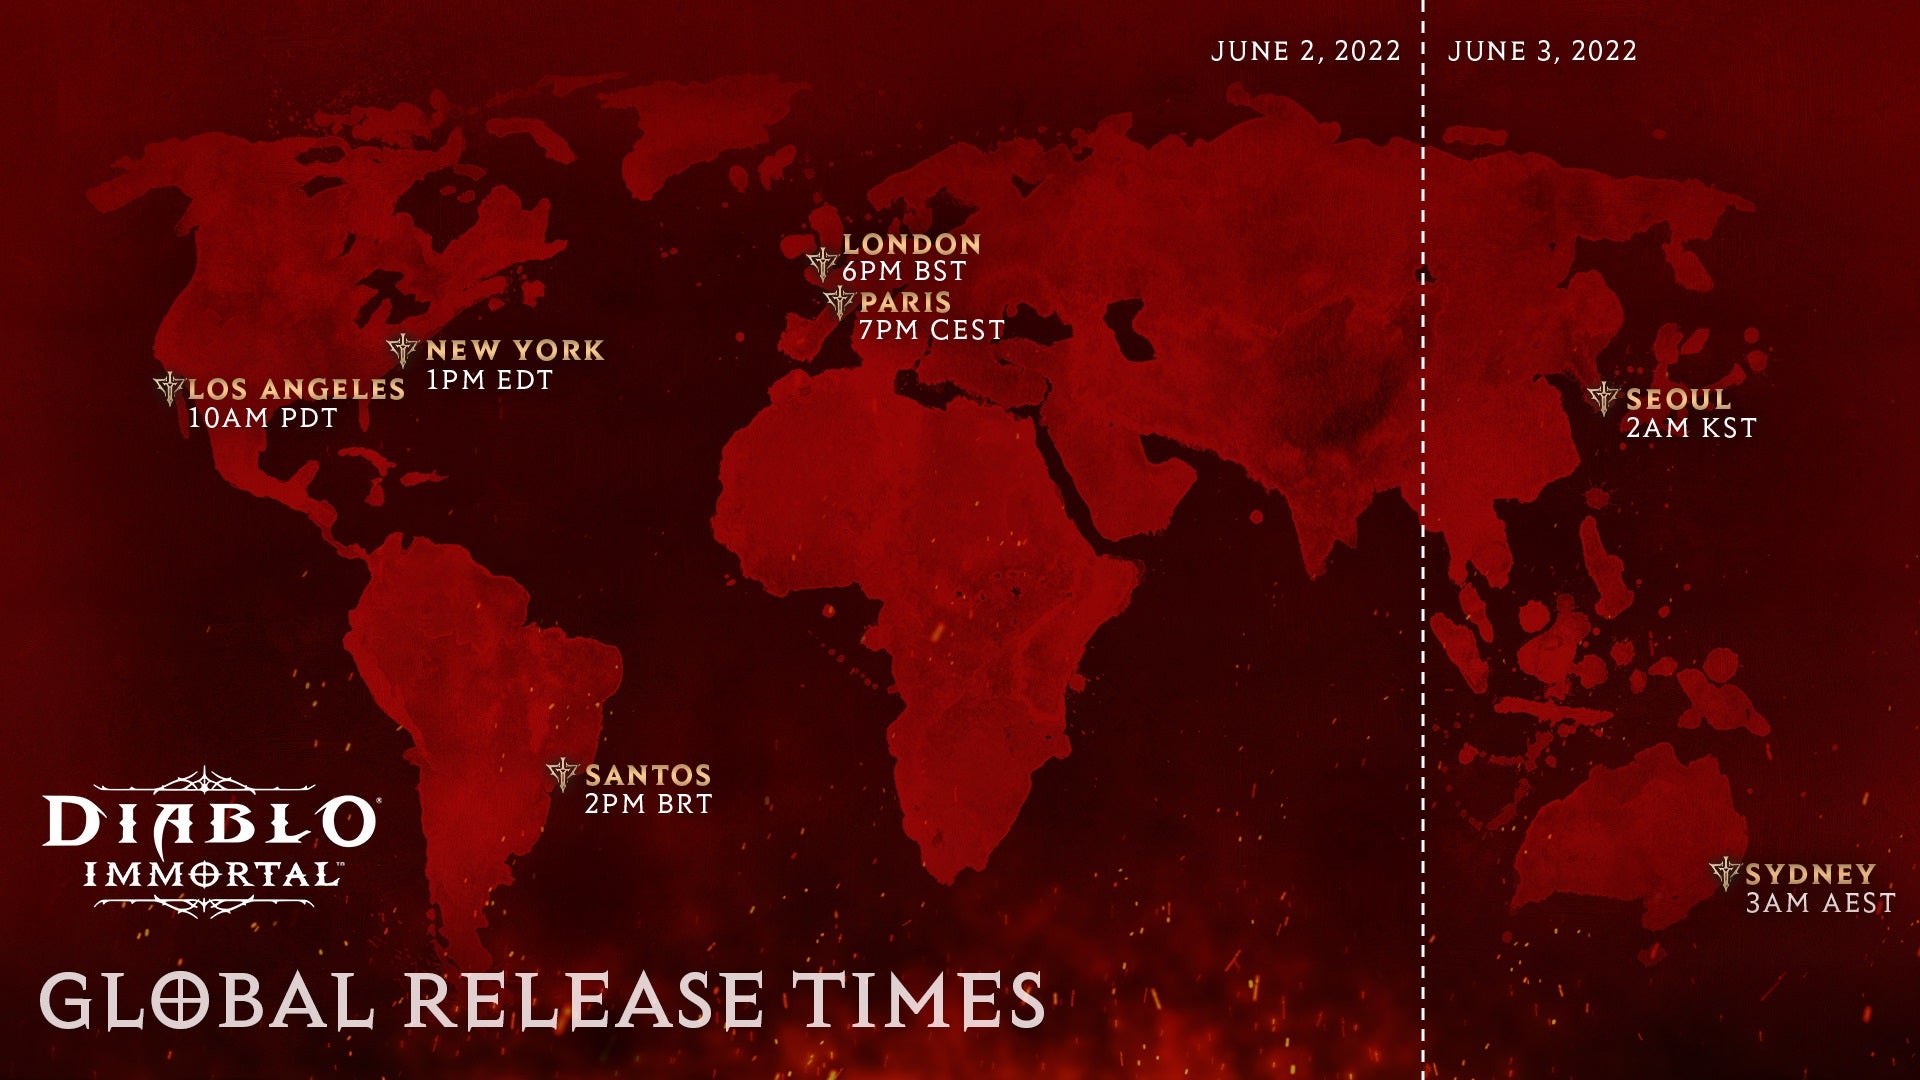 A release time graphic for Diablo Immortal